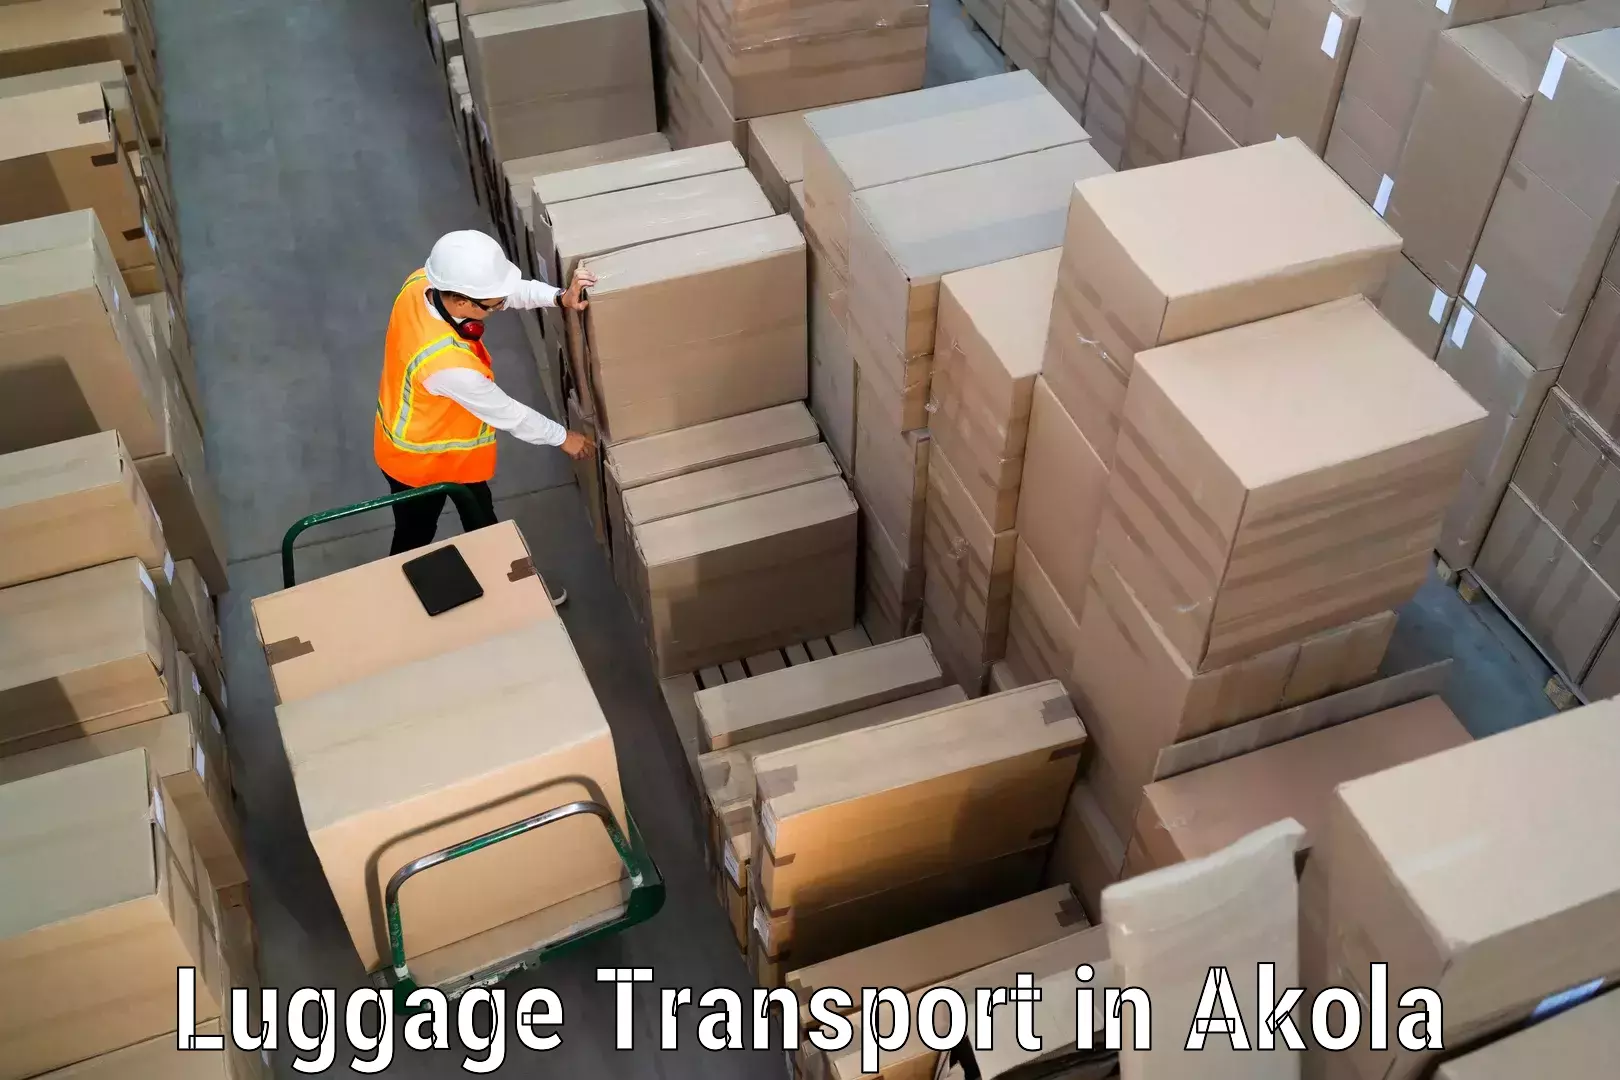 Doorstep luggage collection in Akola